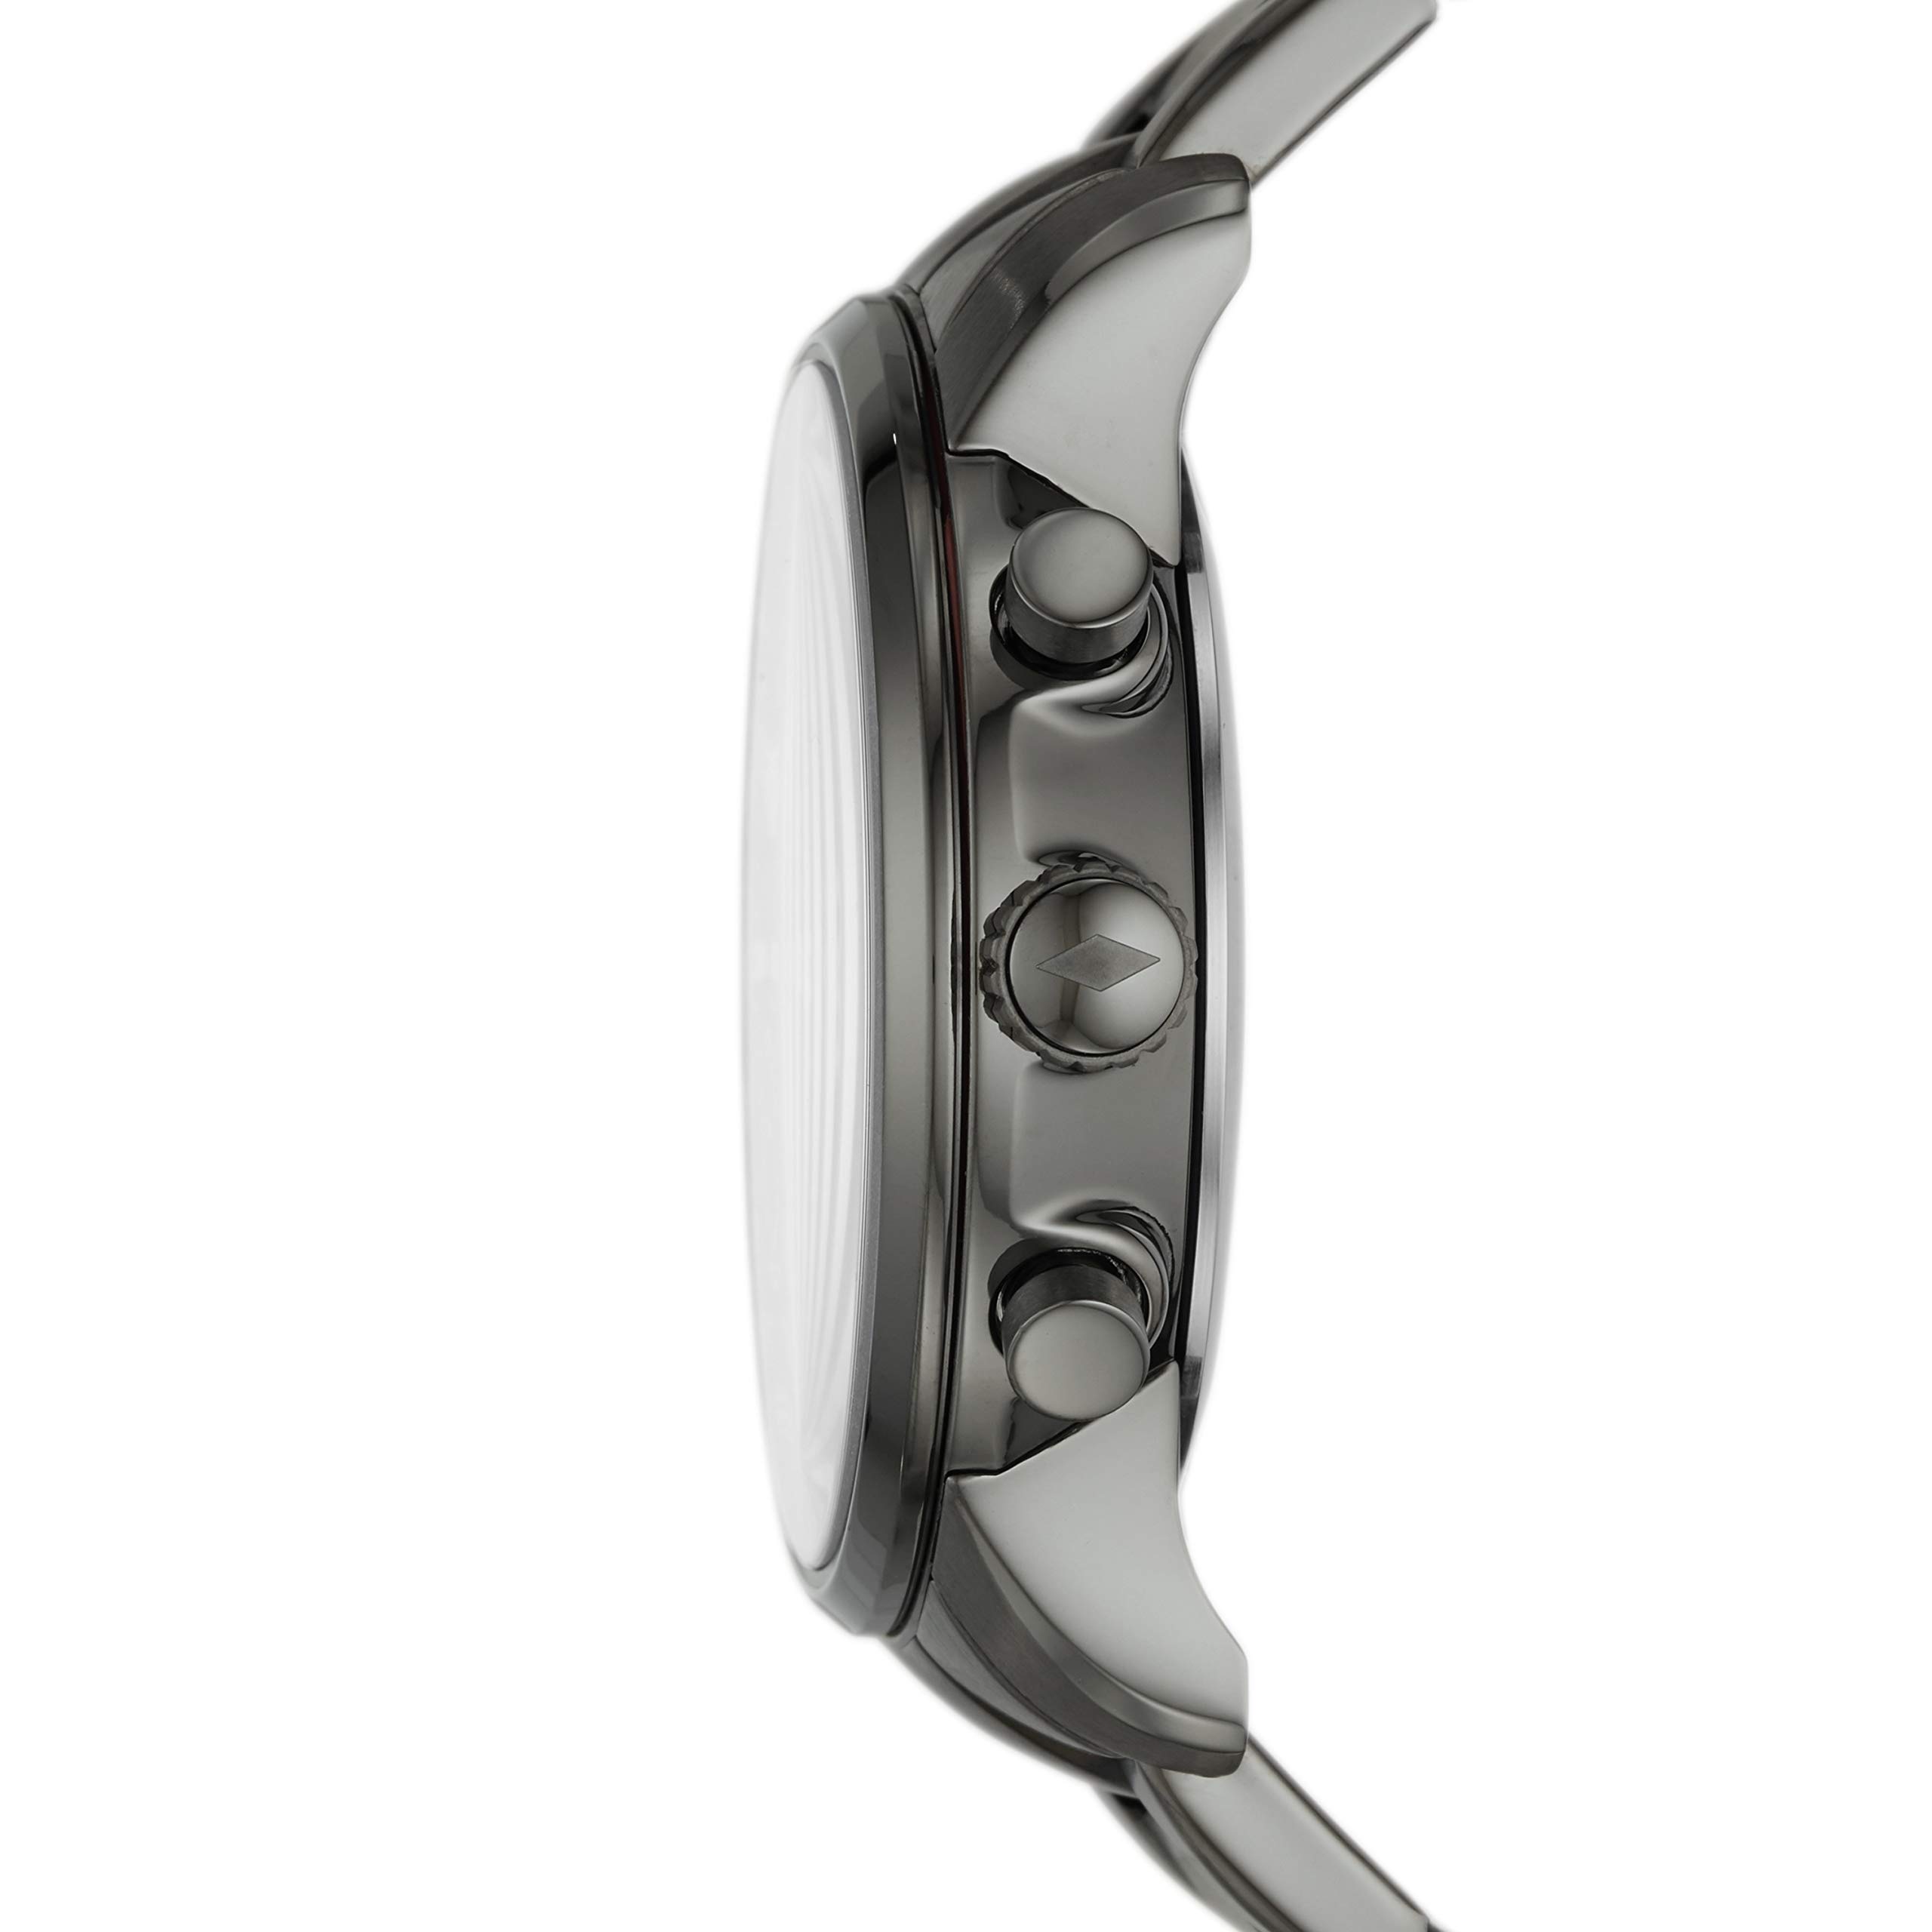 Fossil Men's Goodwin Stainless Steel Hybrid Smartwatch, Color: Smoke Grey (Model: FTW1174)